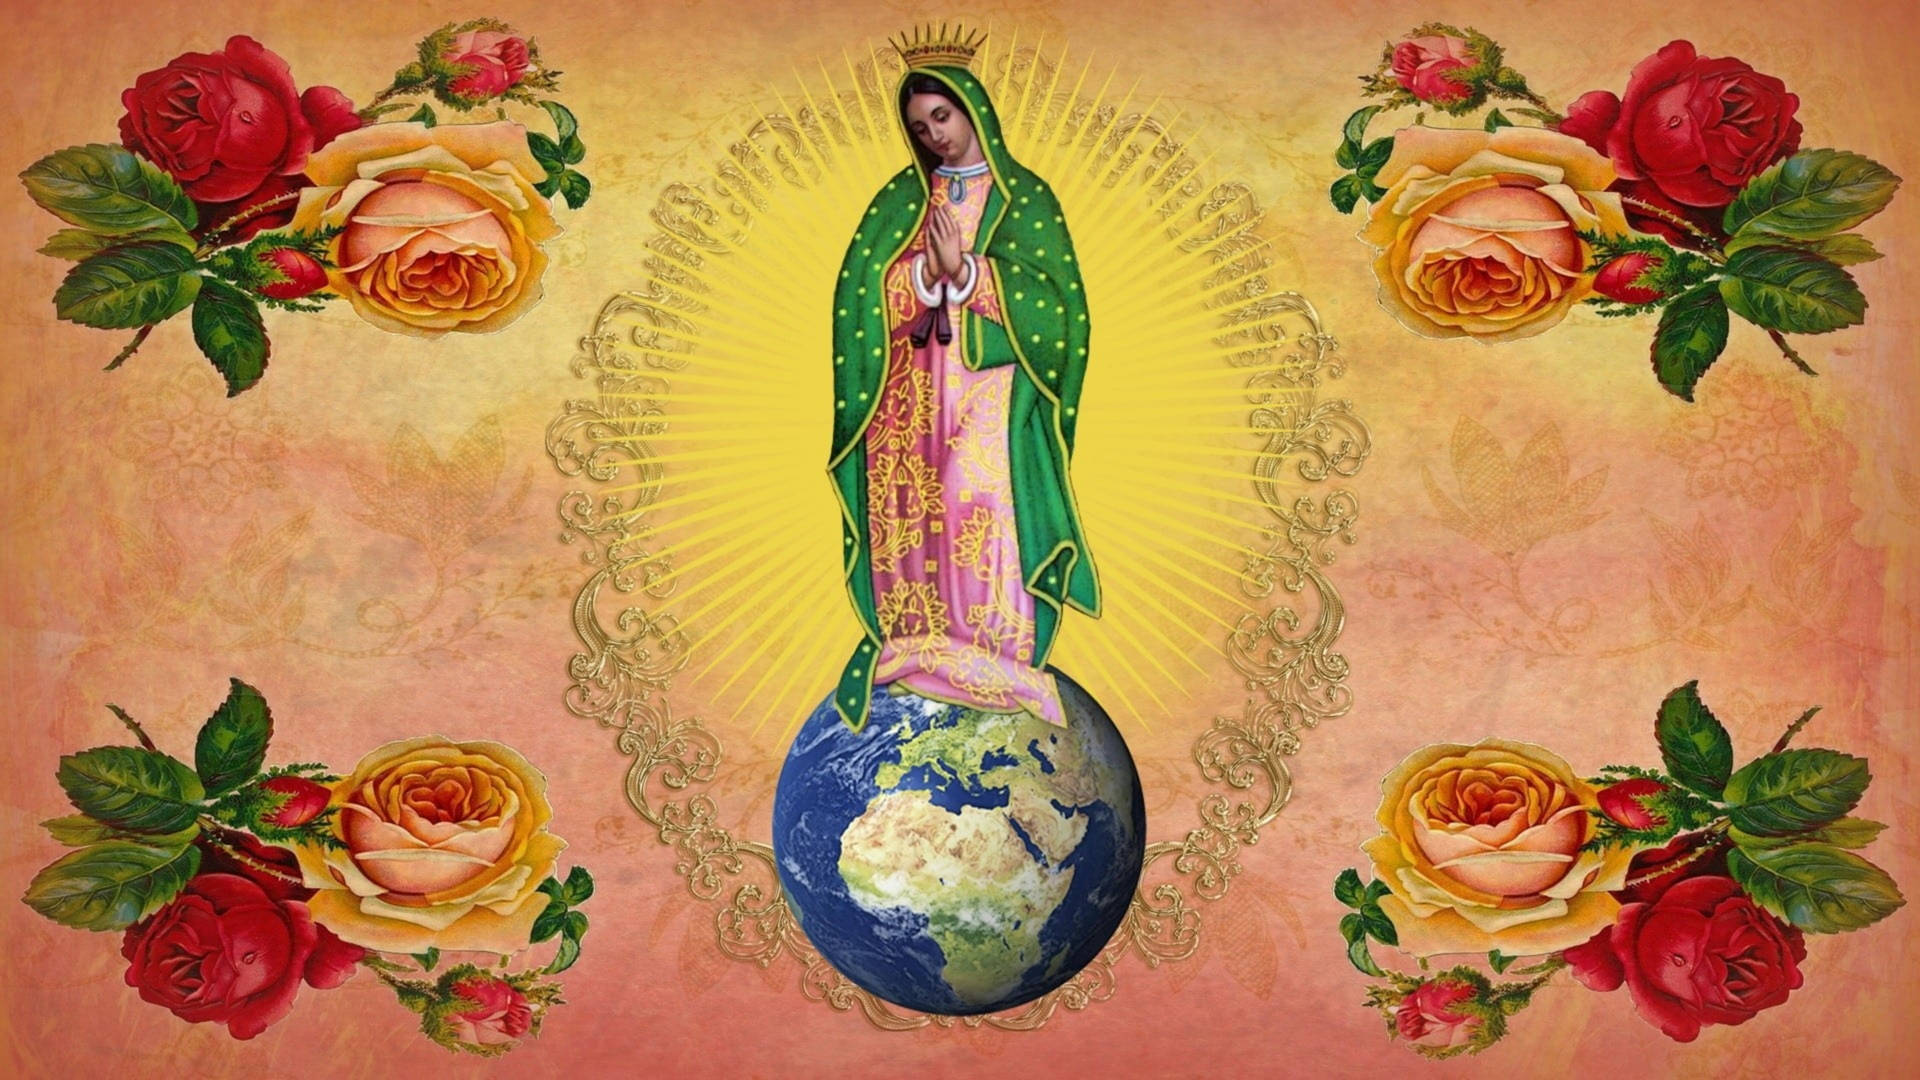 Wallpaper Virgen De Guadalupe 4k HD Background images Live Free Download   FancyOdds